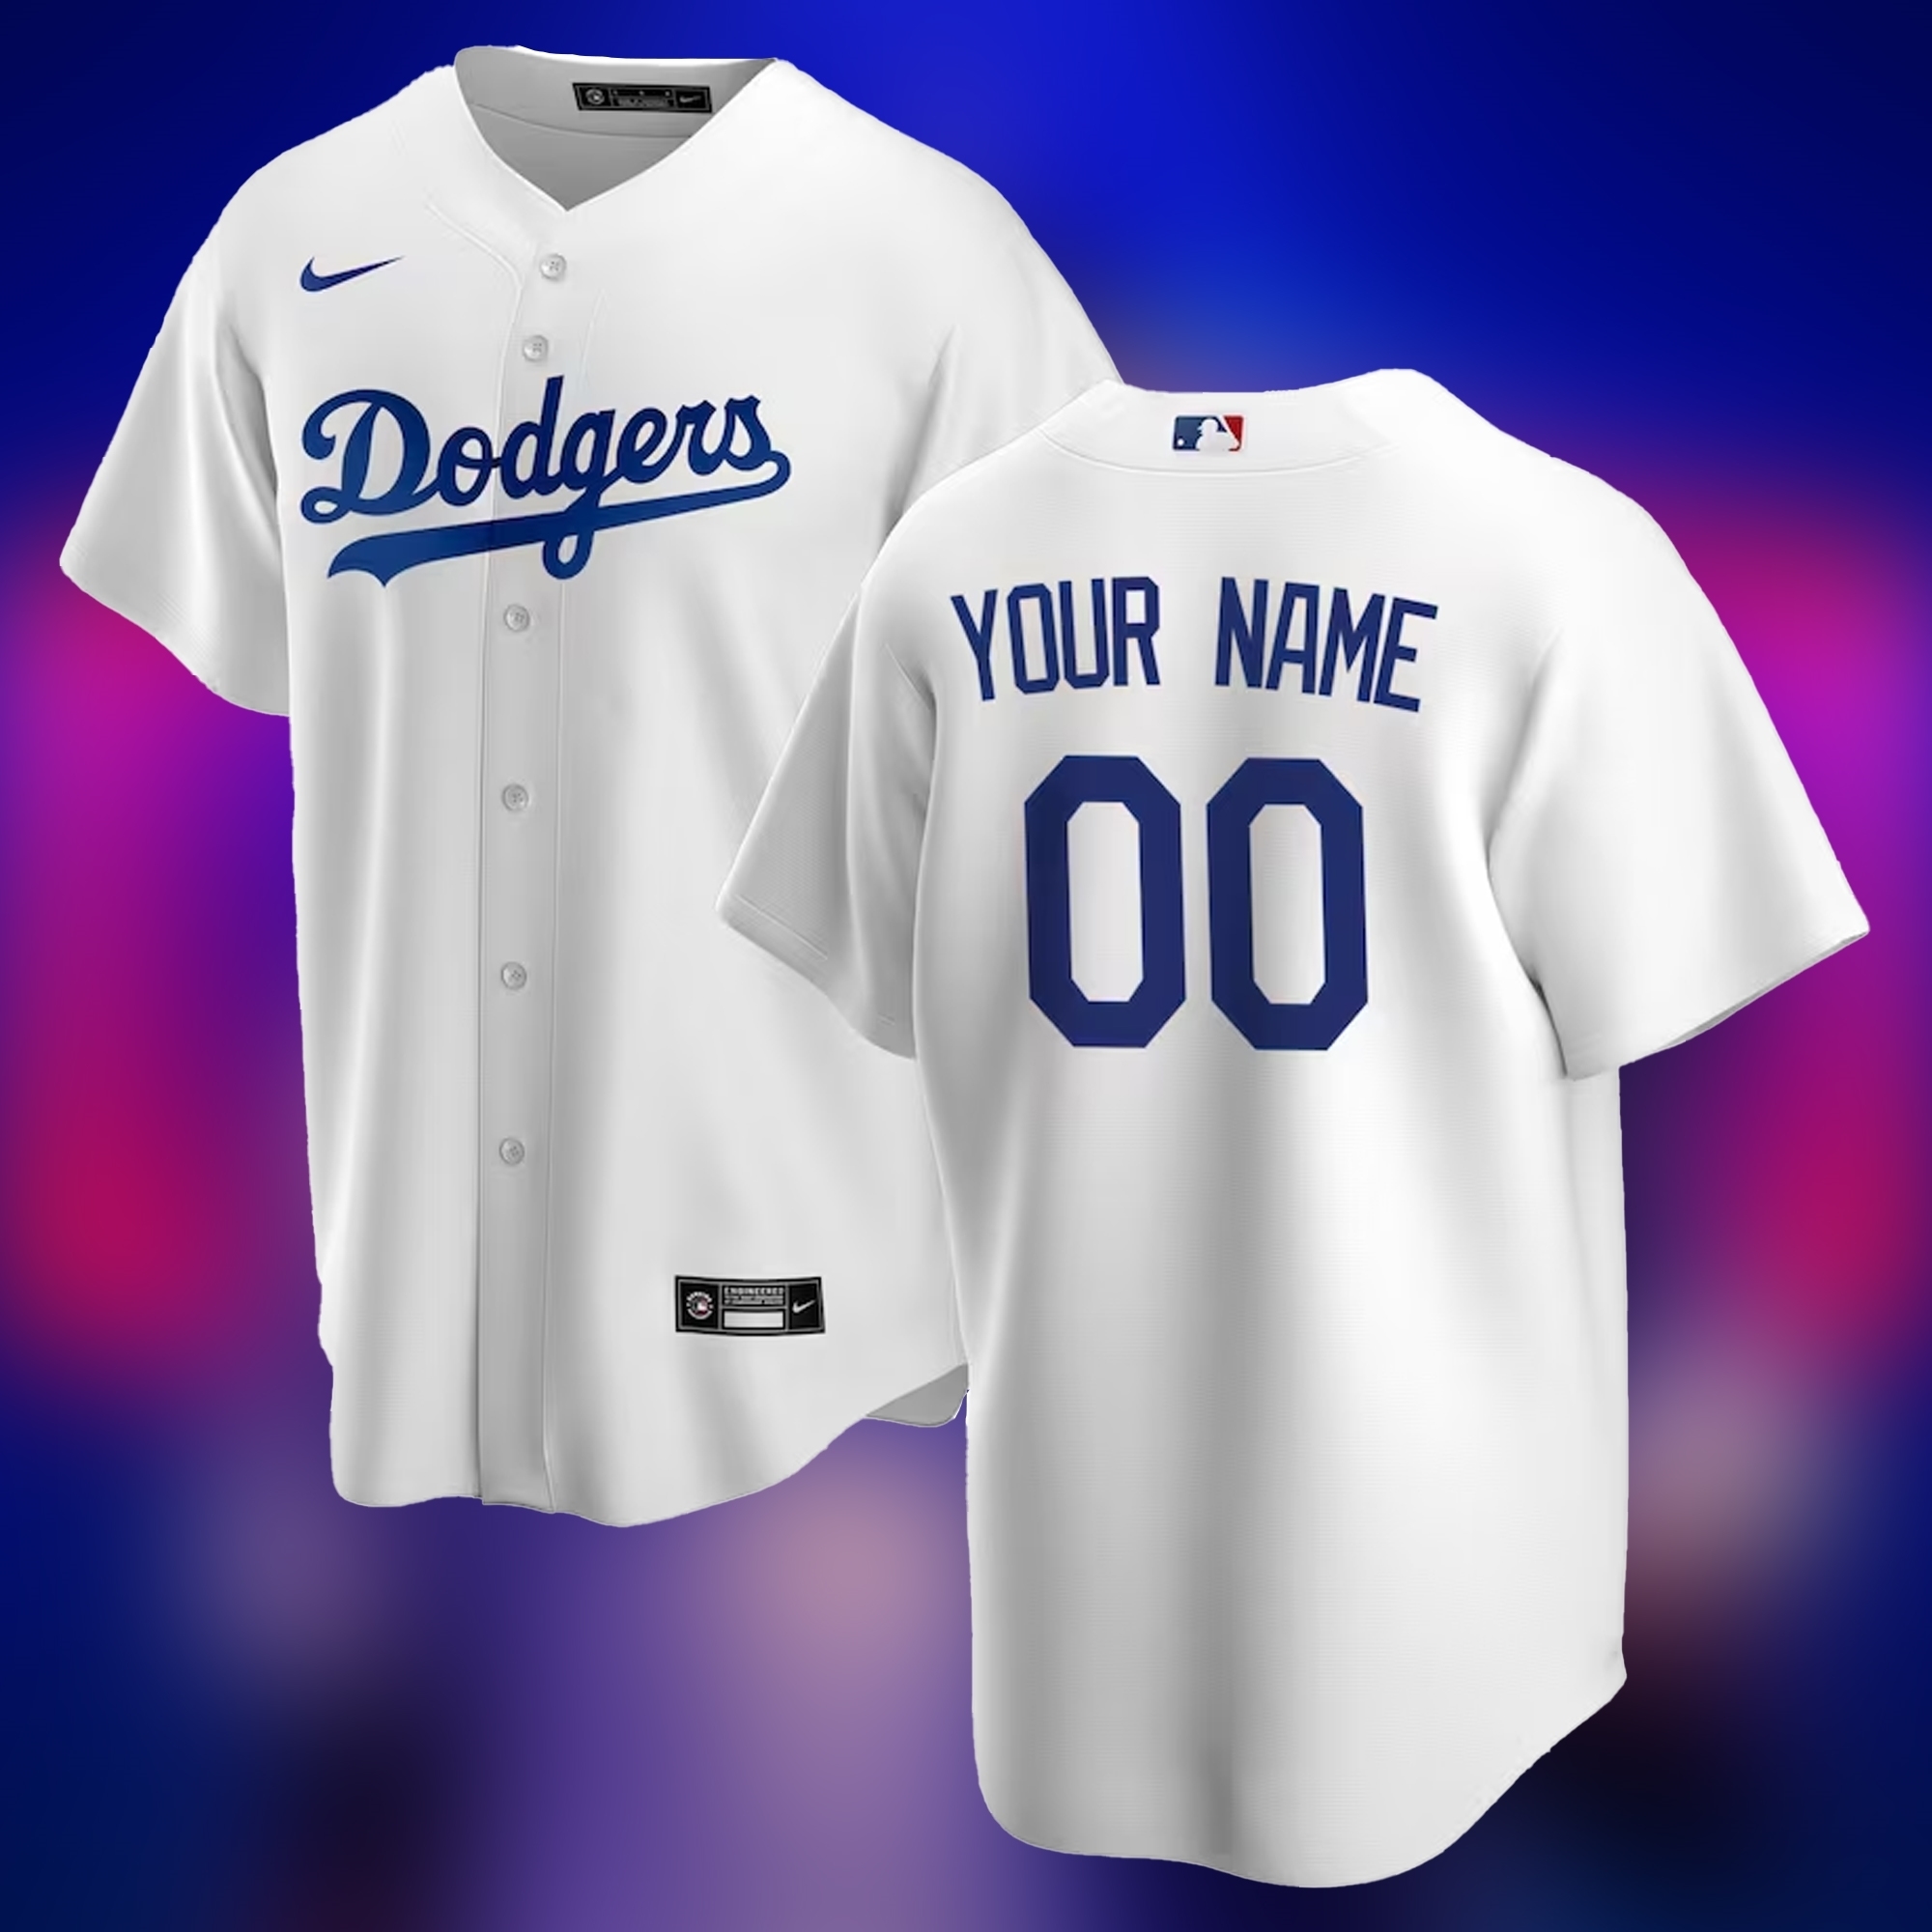 Ohtani Angeles Dodgers Jersey shirt 1